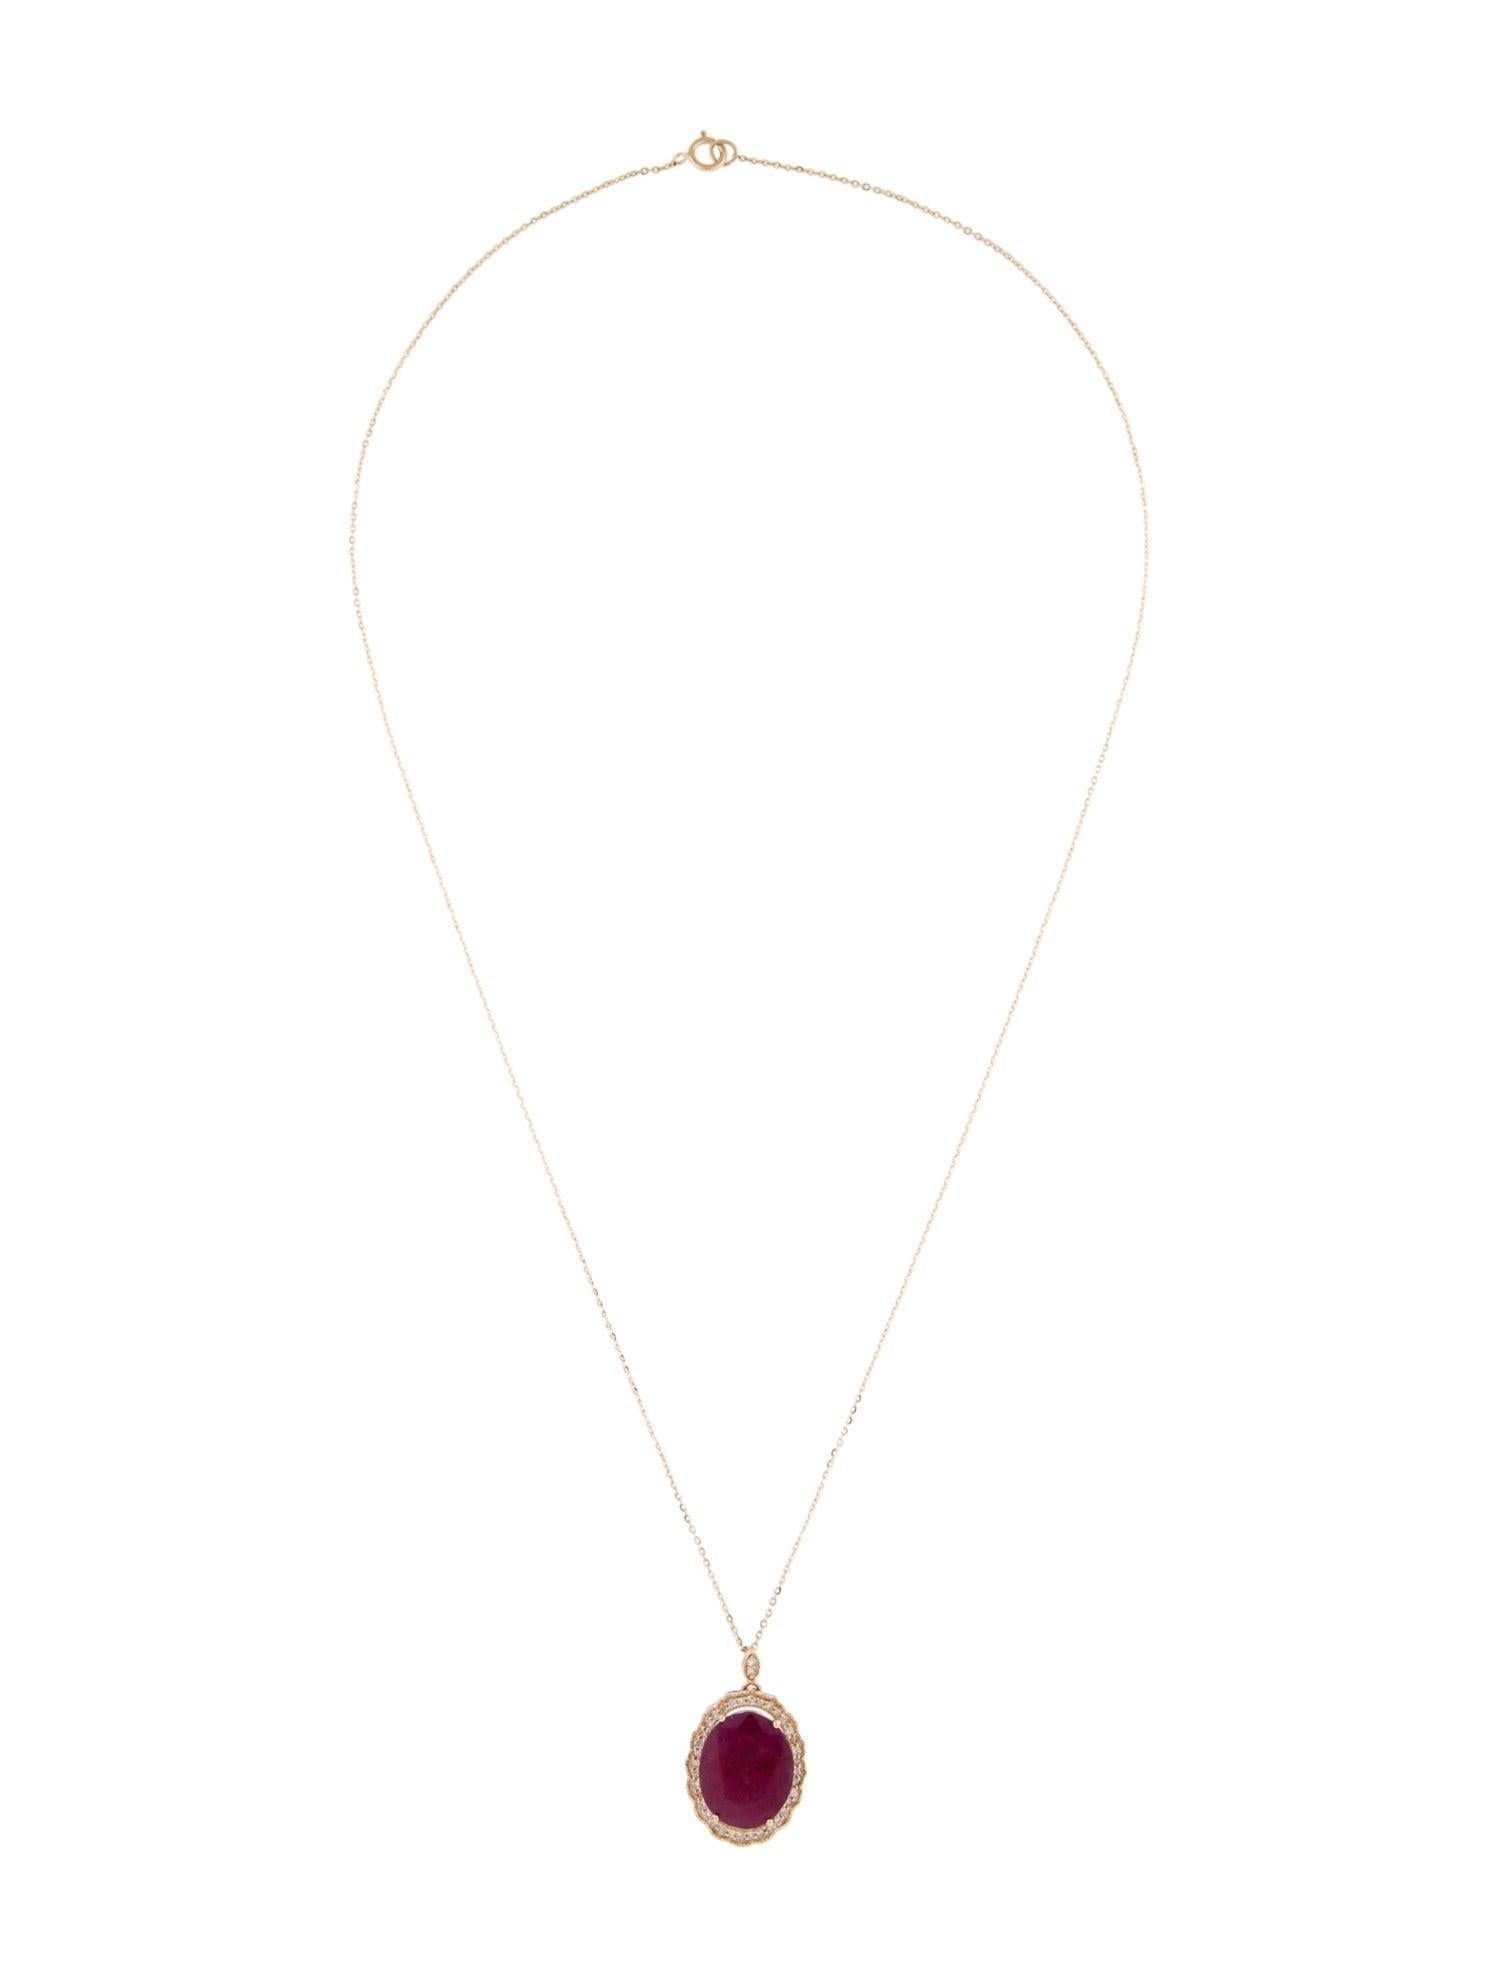 Brilliant Cut 14K 3.79ct Ruby & Diamond Pendant Necklace: Exquisite Luxury Statement Jewelry For Sale